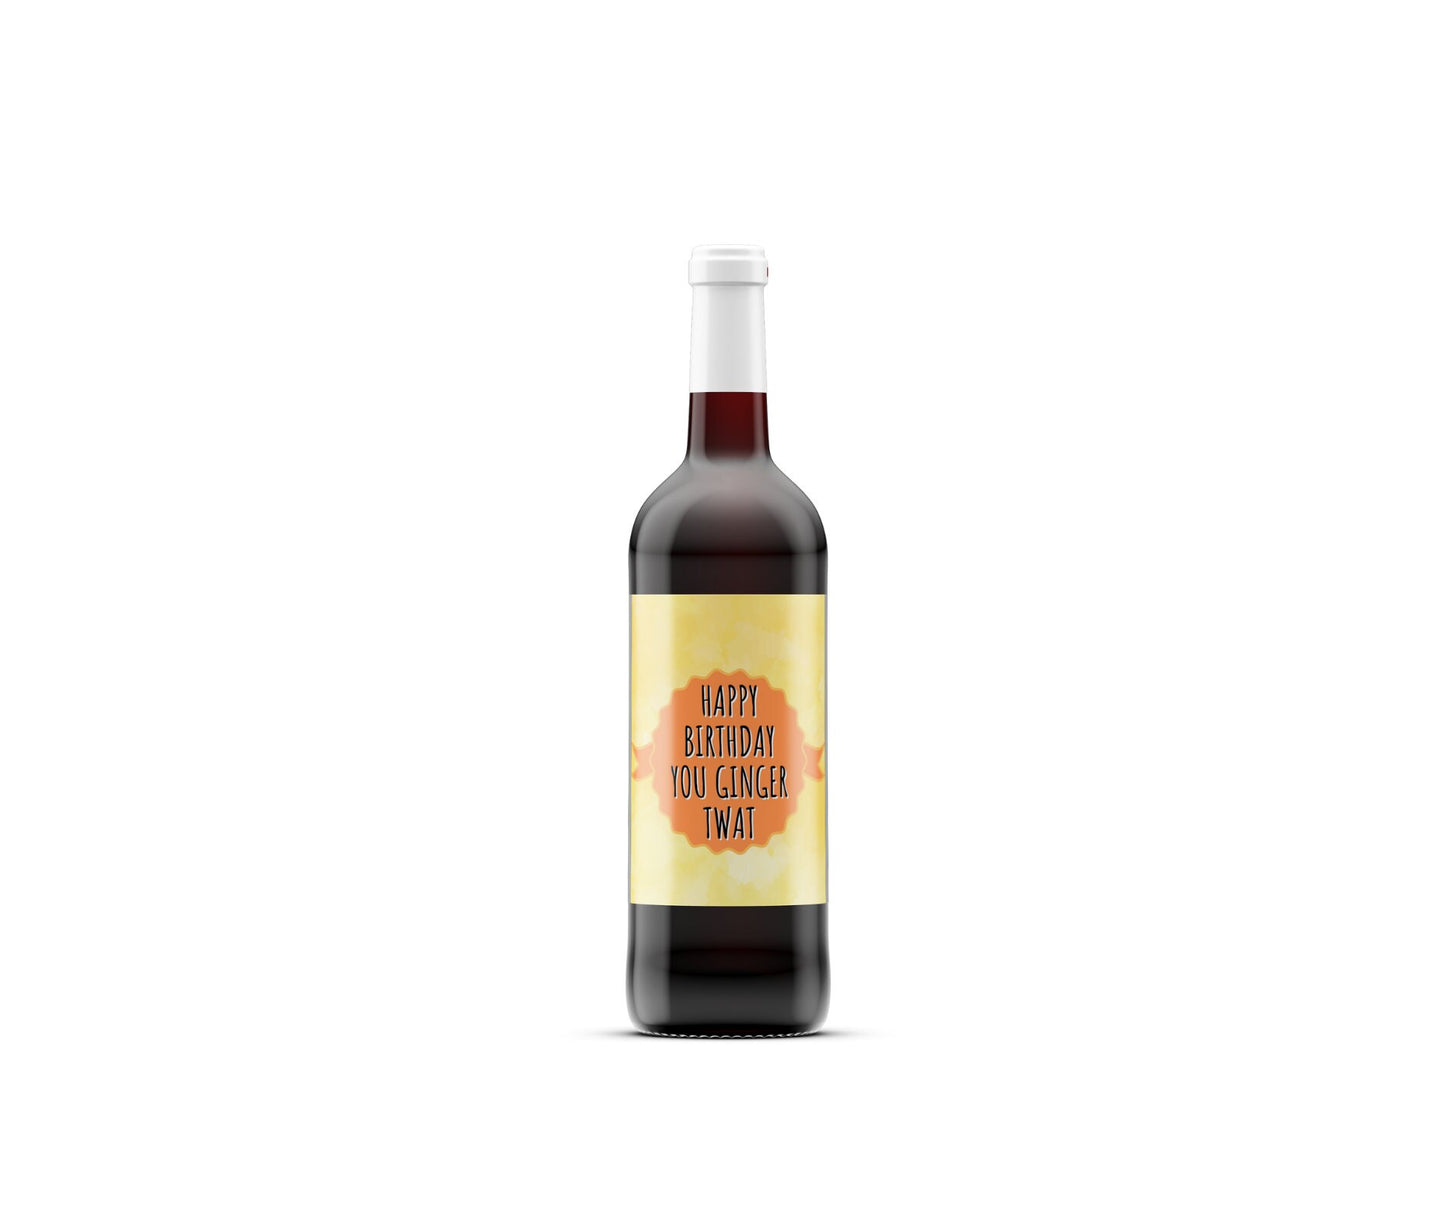 Happy Birthday you Ginger Twat wine bottle label